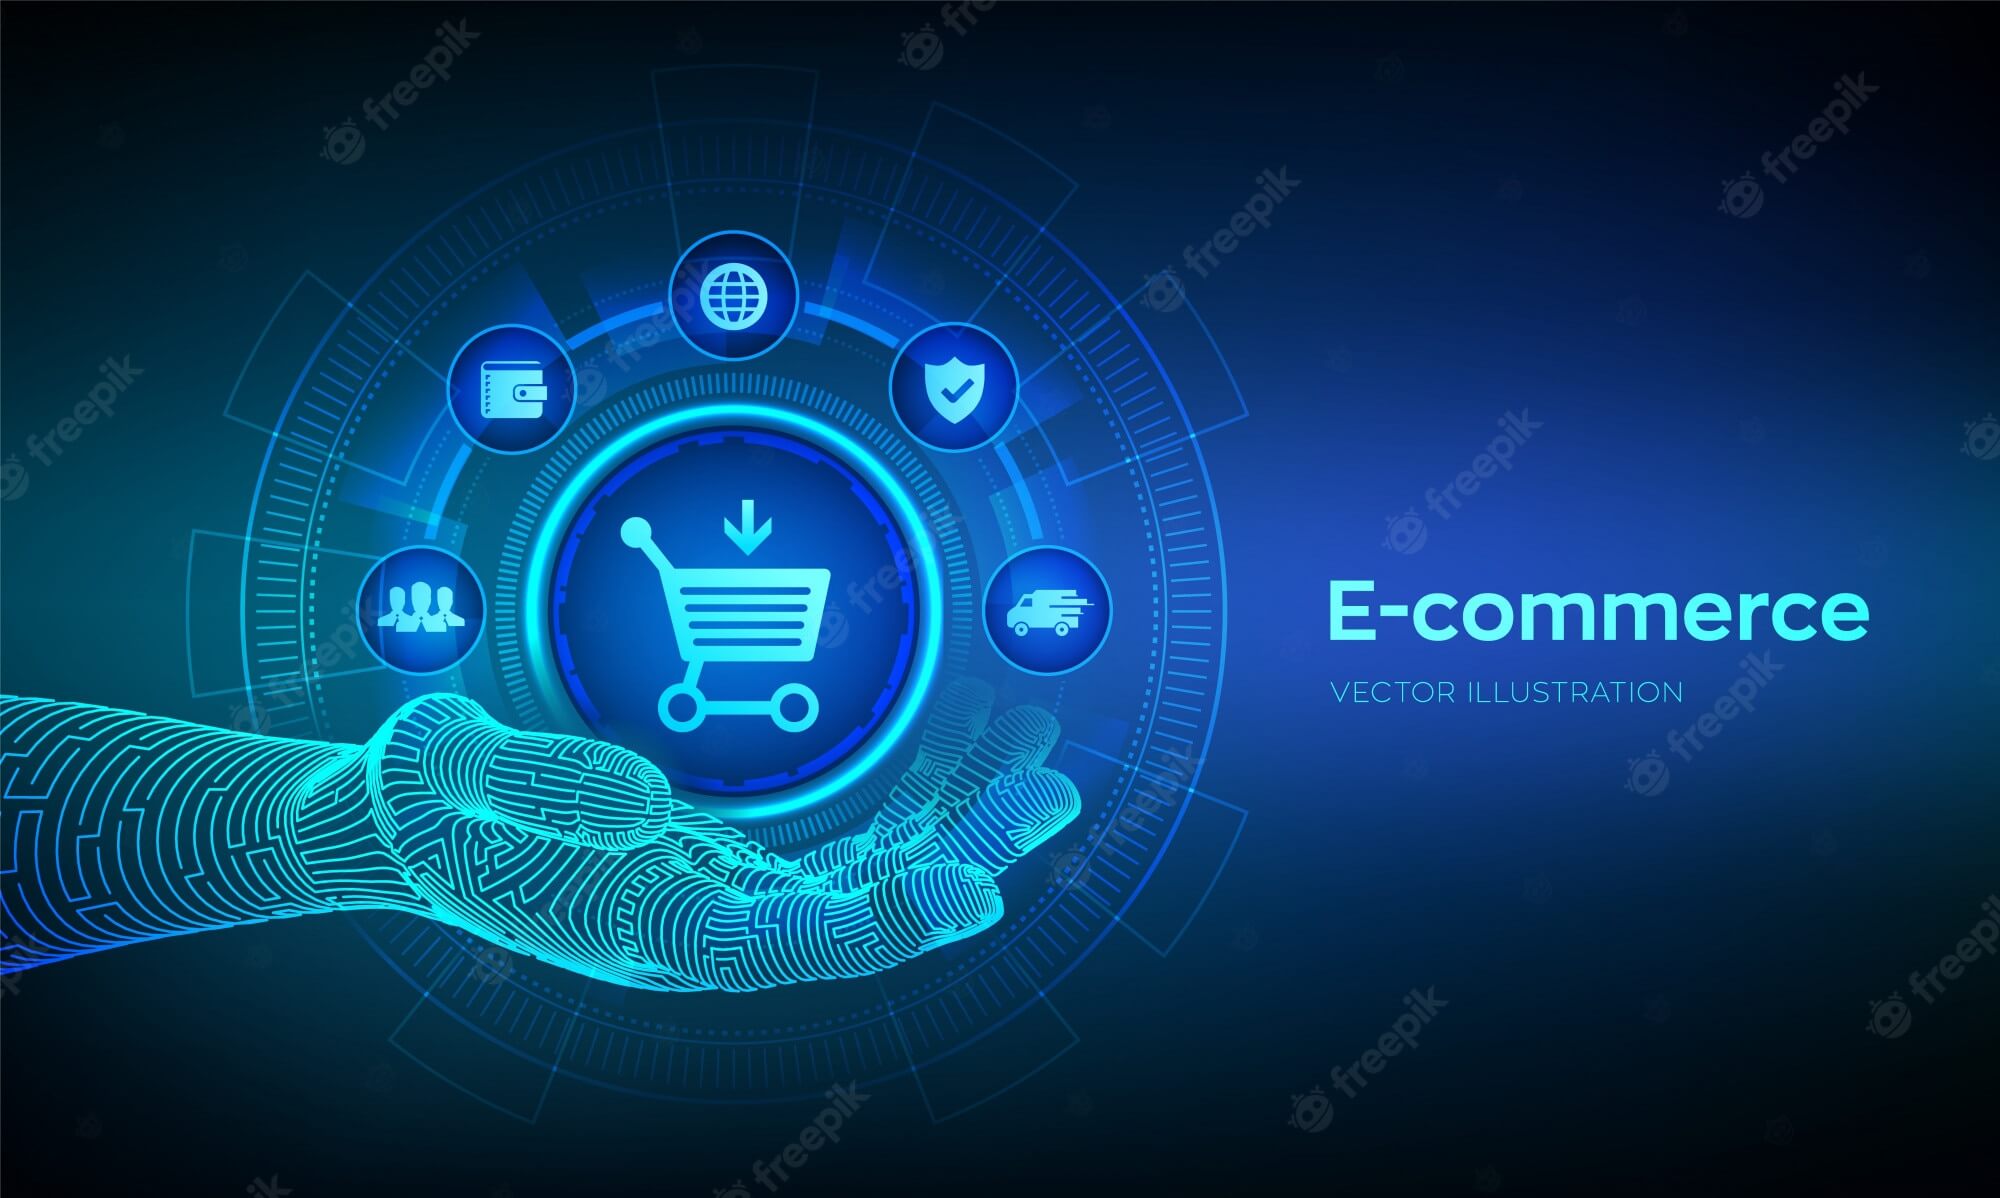 An image showing e-commerce app